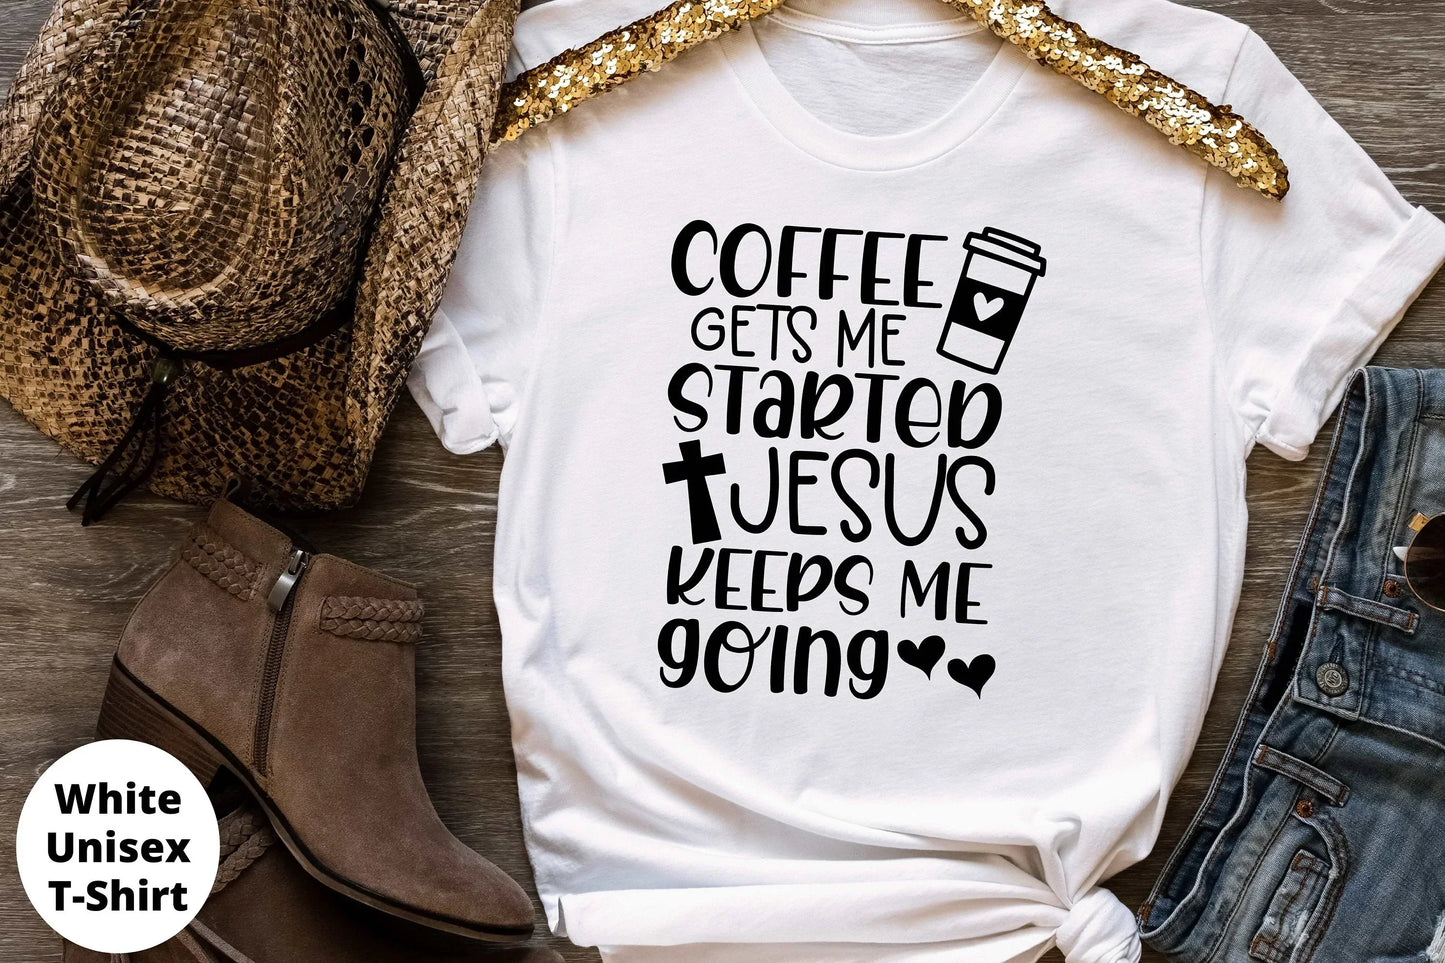 I love Coffee and Jesus, Christian Shirt HMDesignStudioUS